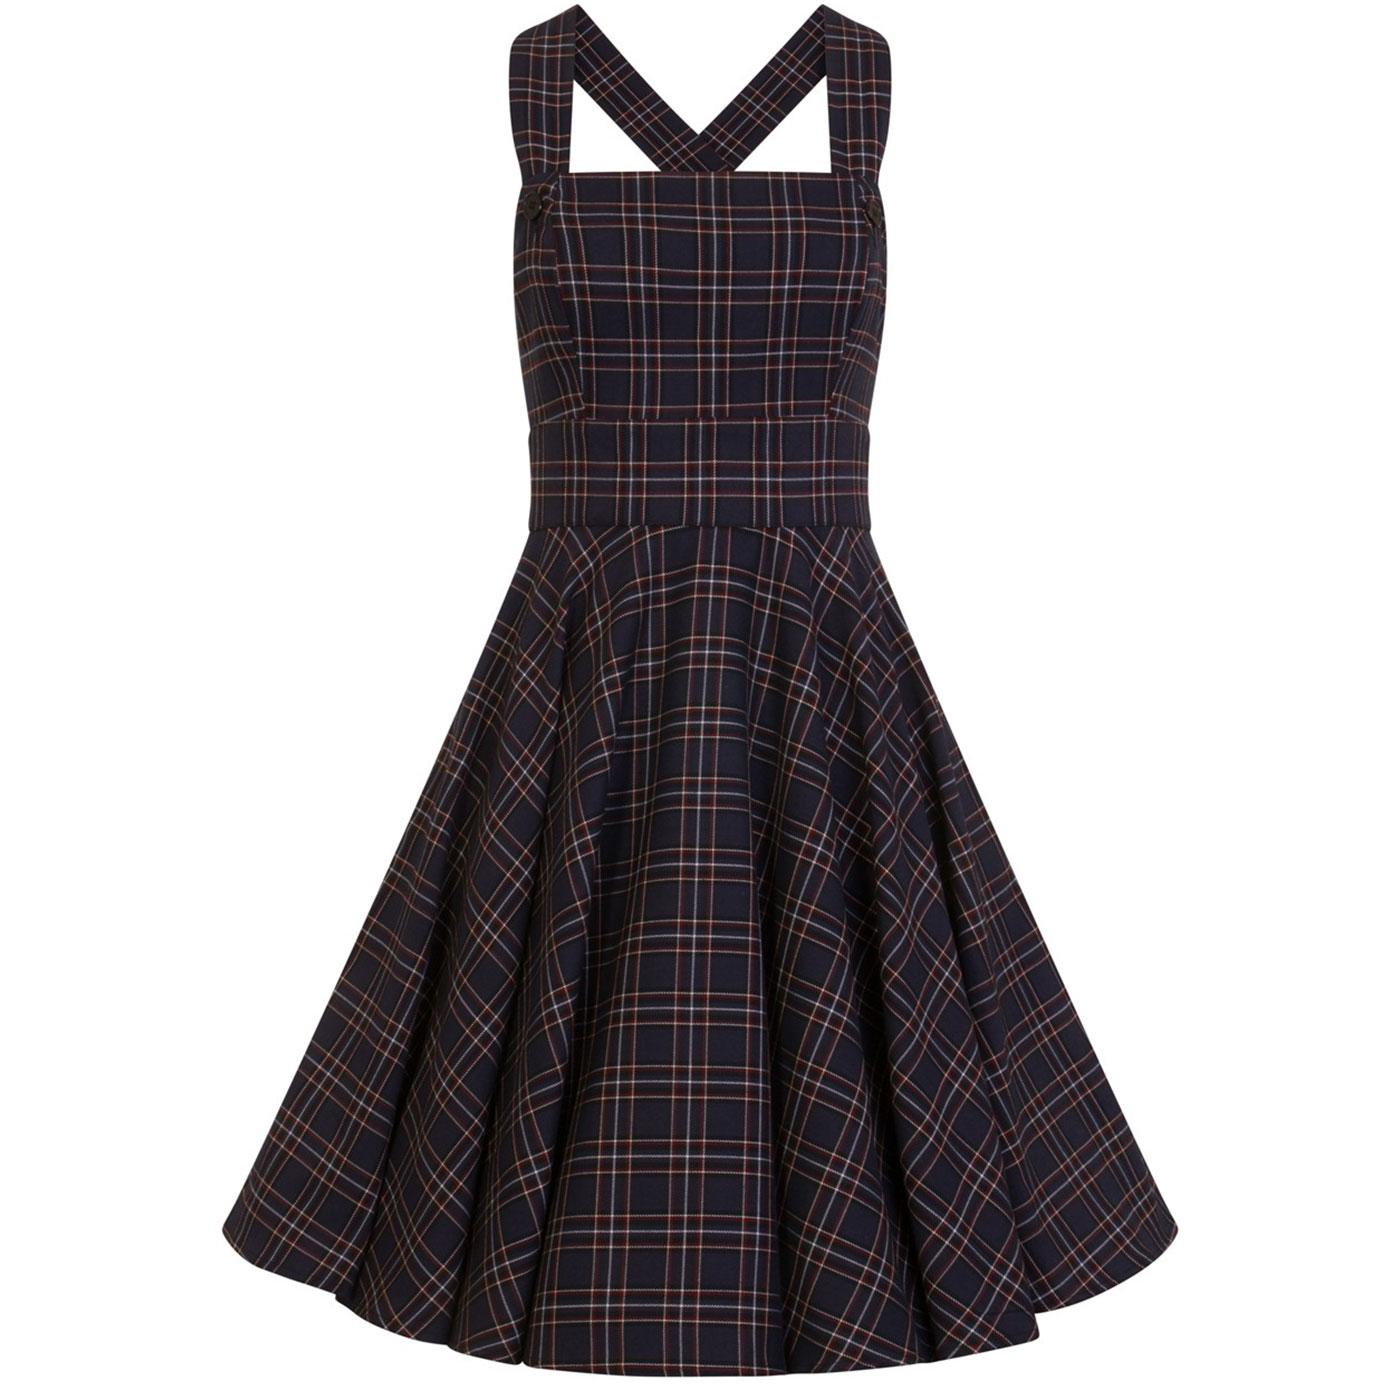 Peebles HELL BUNNY 1950's Tartan Pinafore Dress